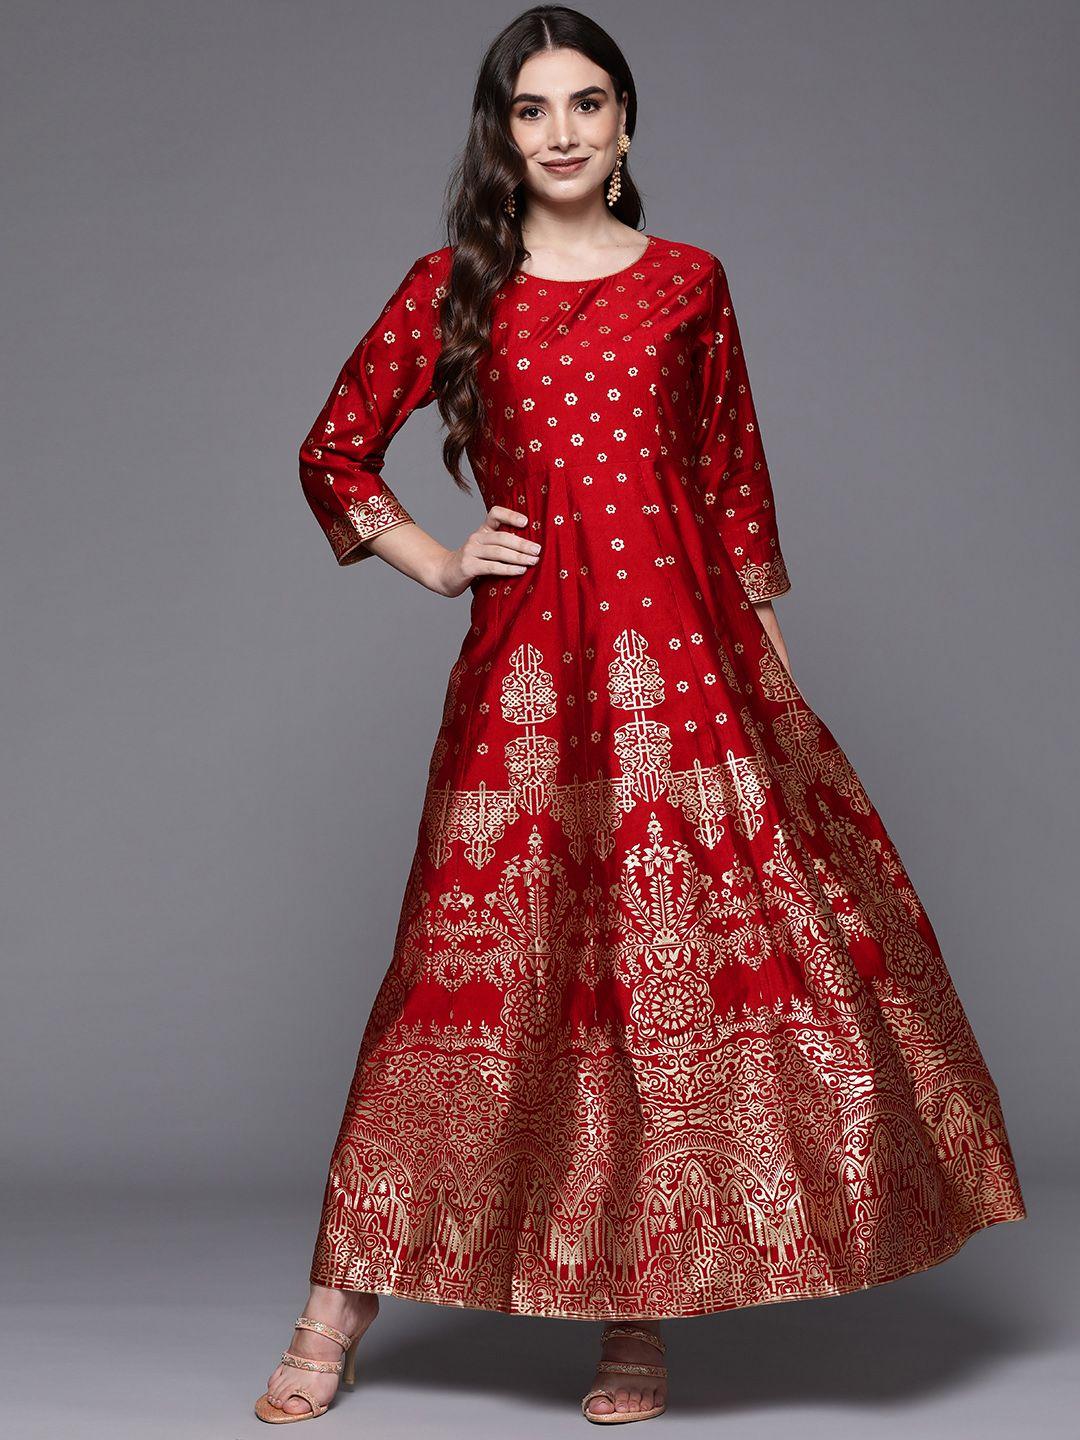 indo-era-red-&-gold-toned-ethnic-motifs-liva-ethnic-a-line-maxi-dress